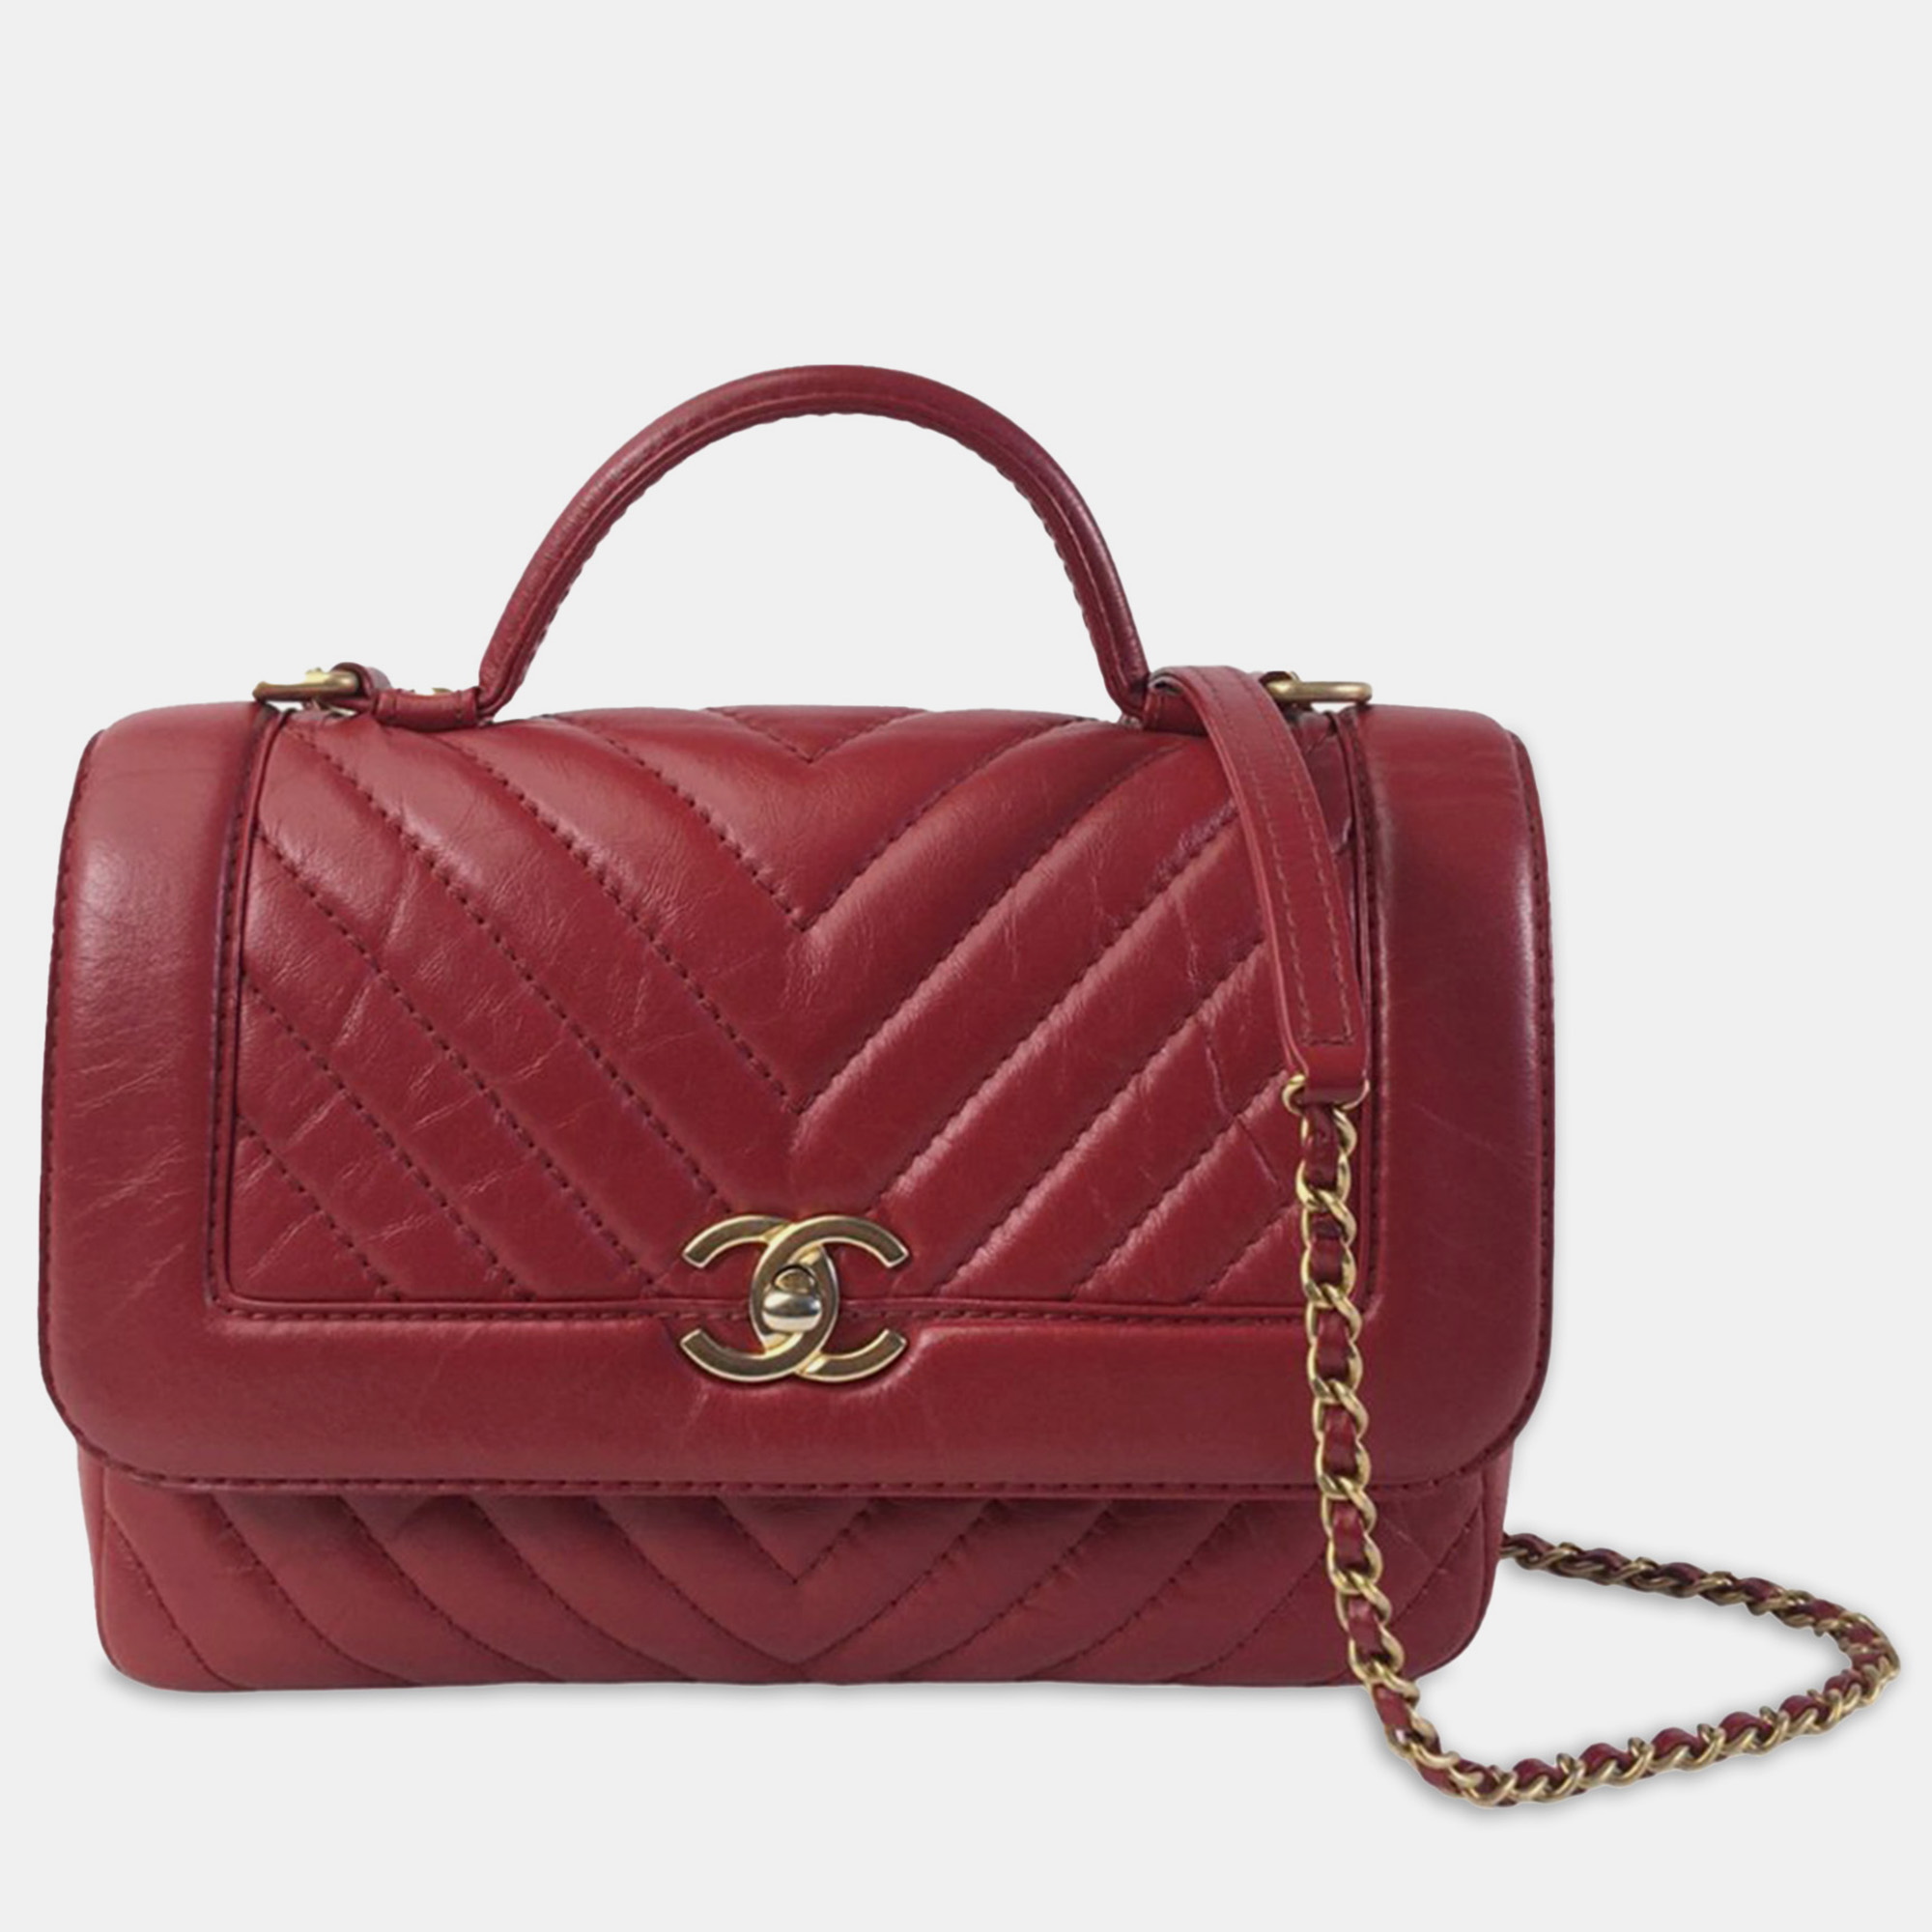 Chanel cc chevron flap satchel